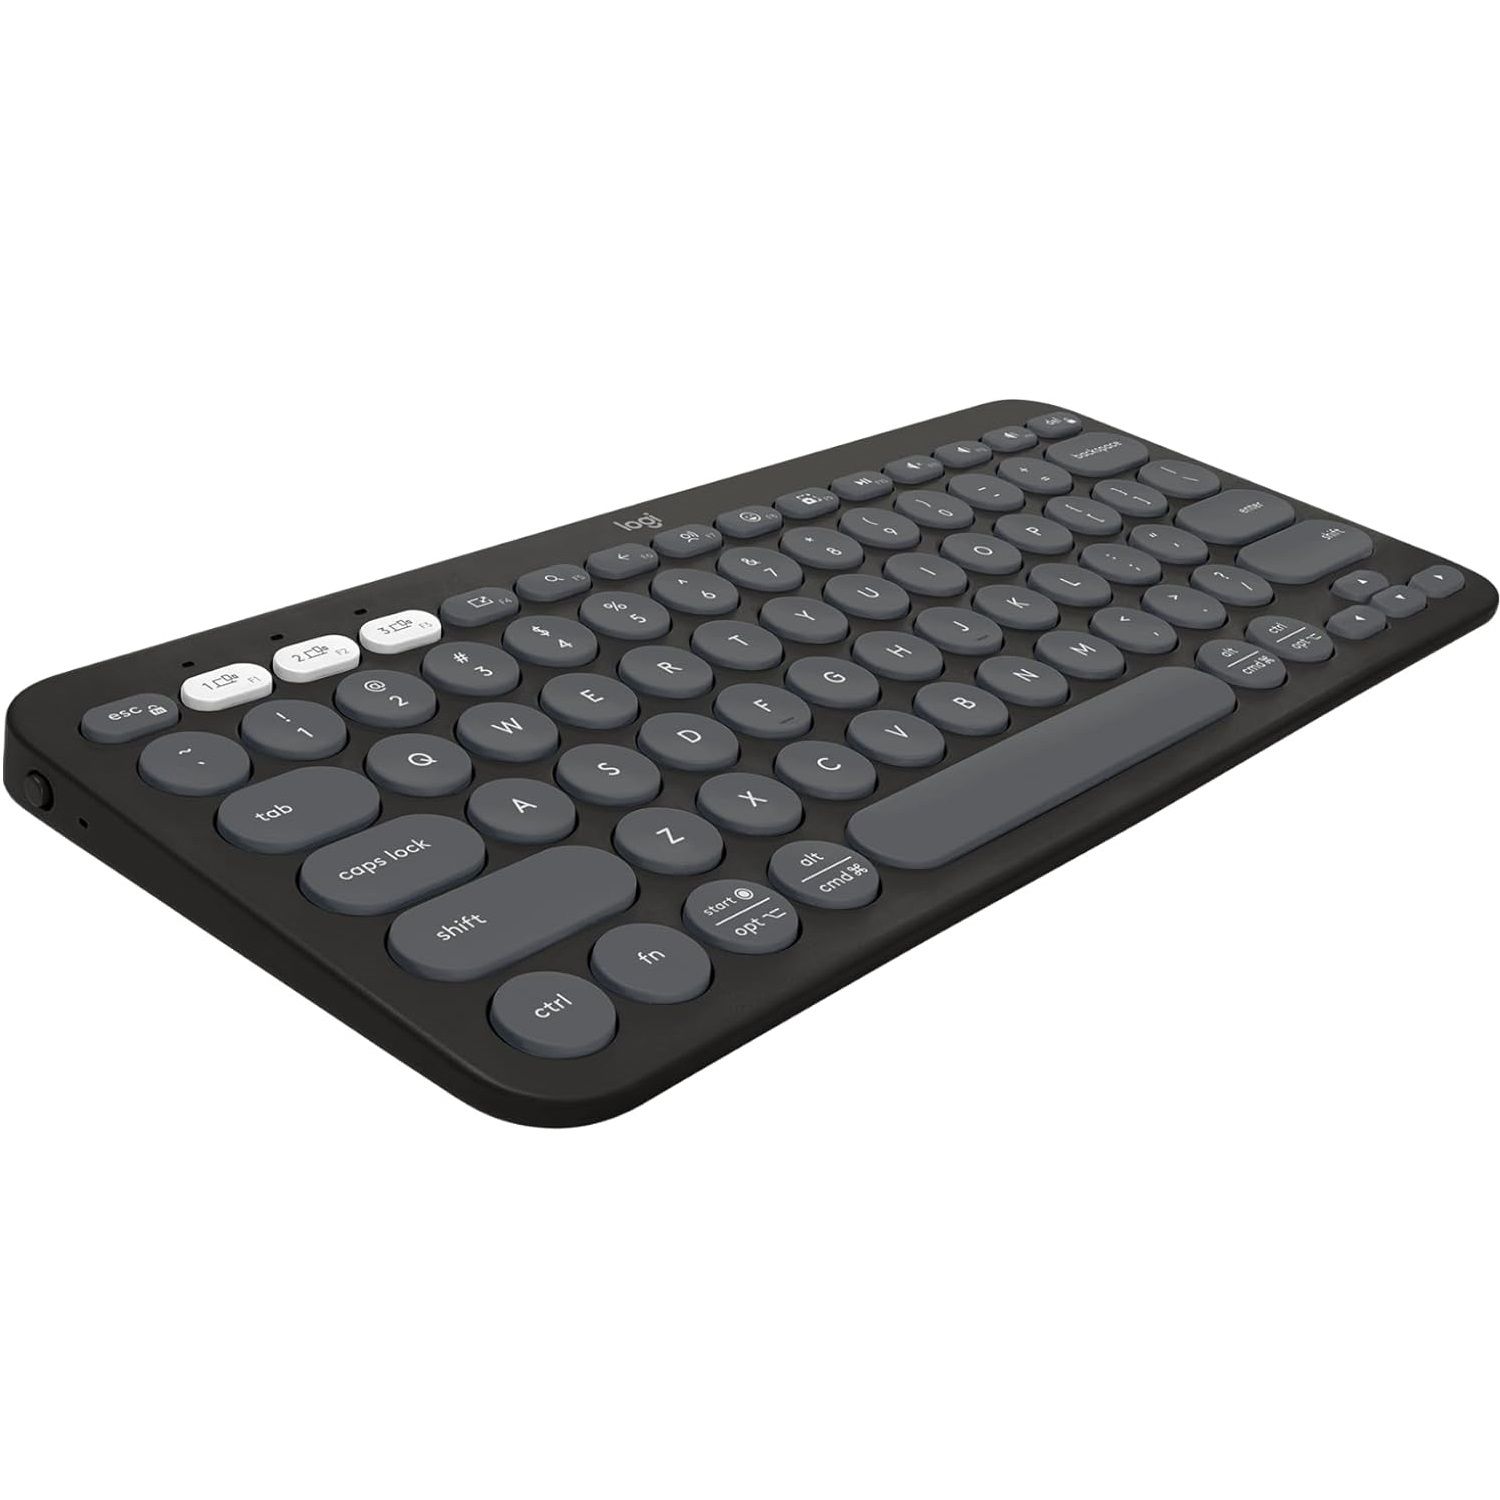 Logitech Pebble Keys 2 K380s keyboard positioned at an angle